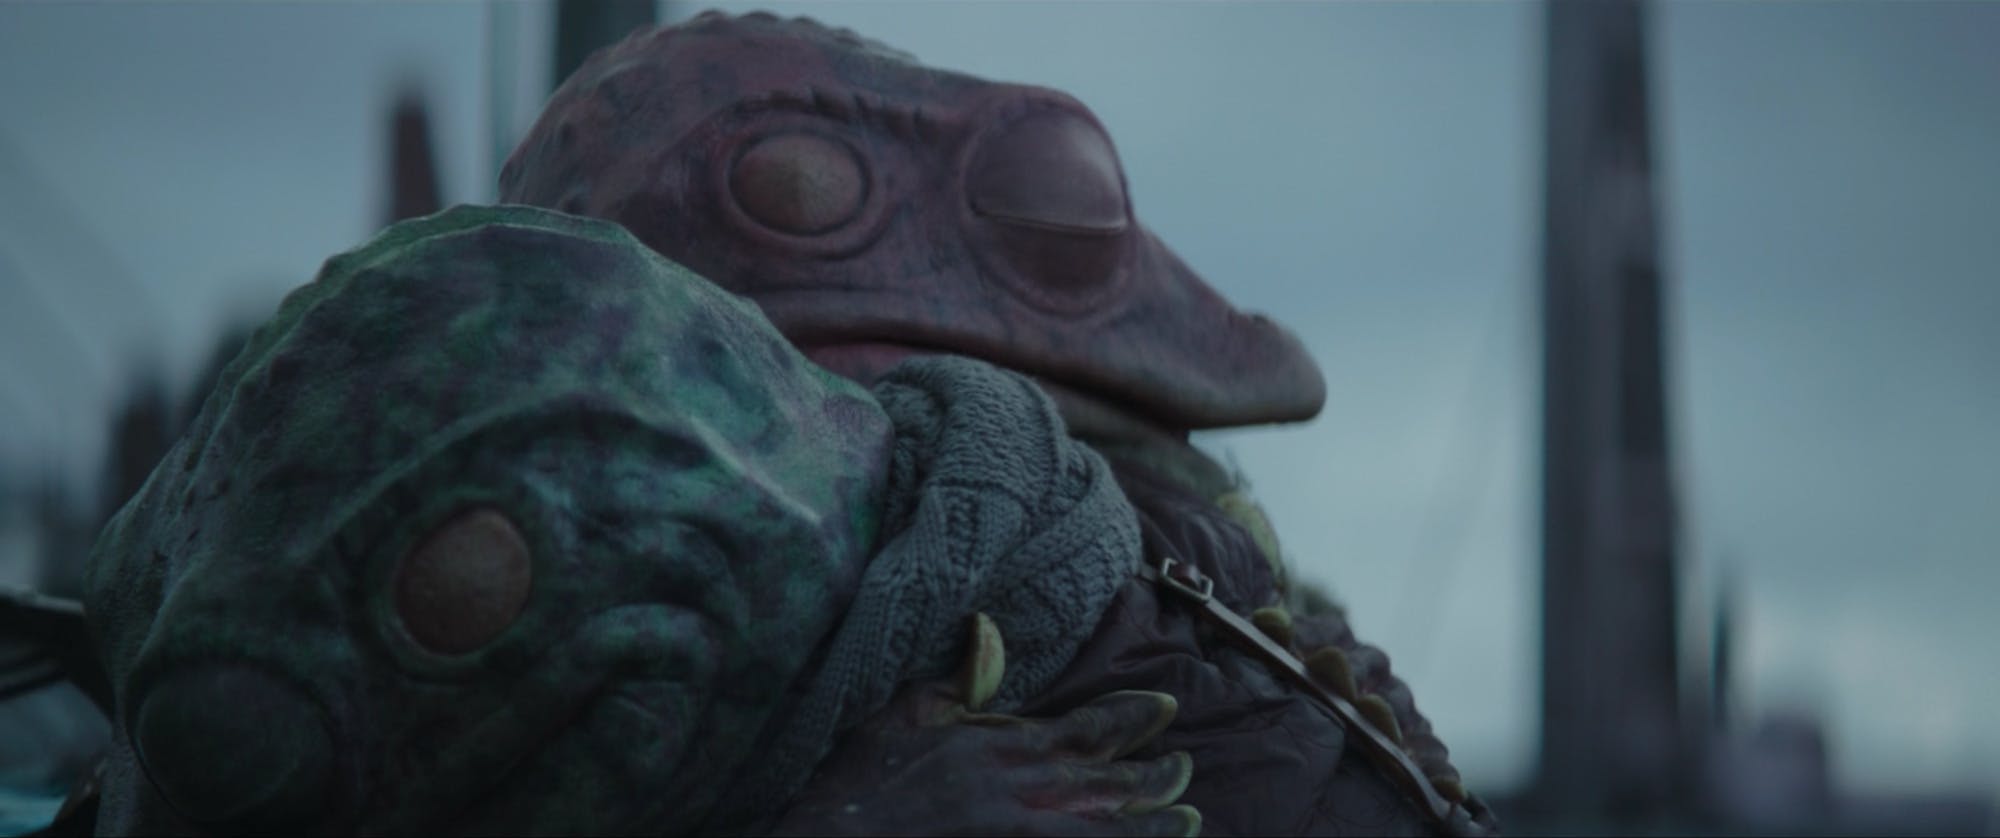 frog man scarf